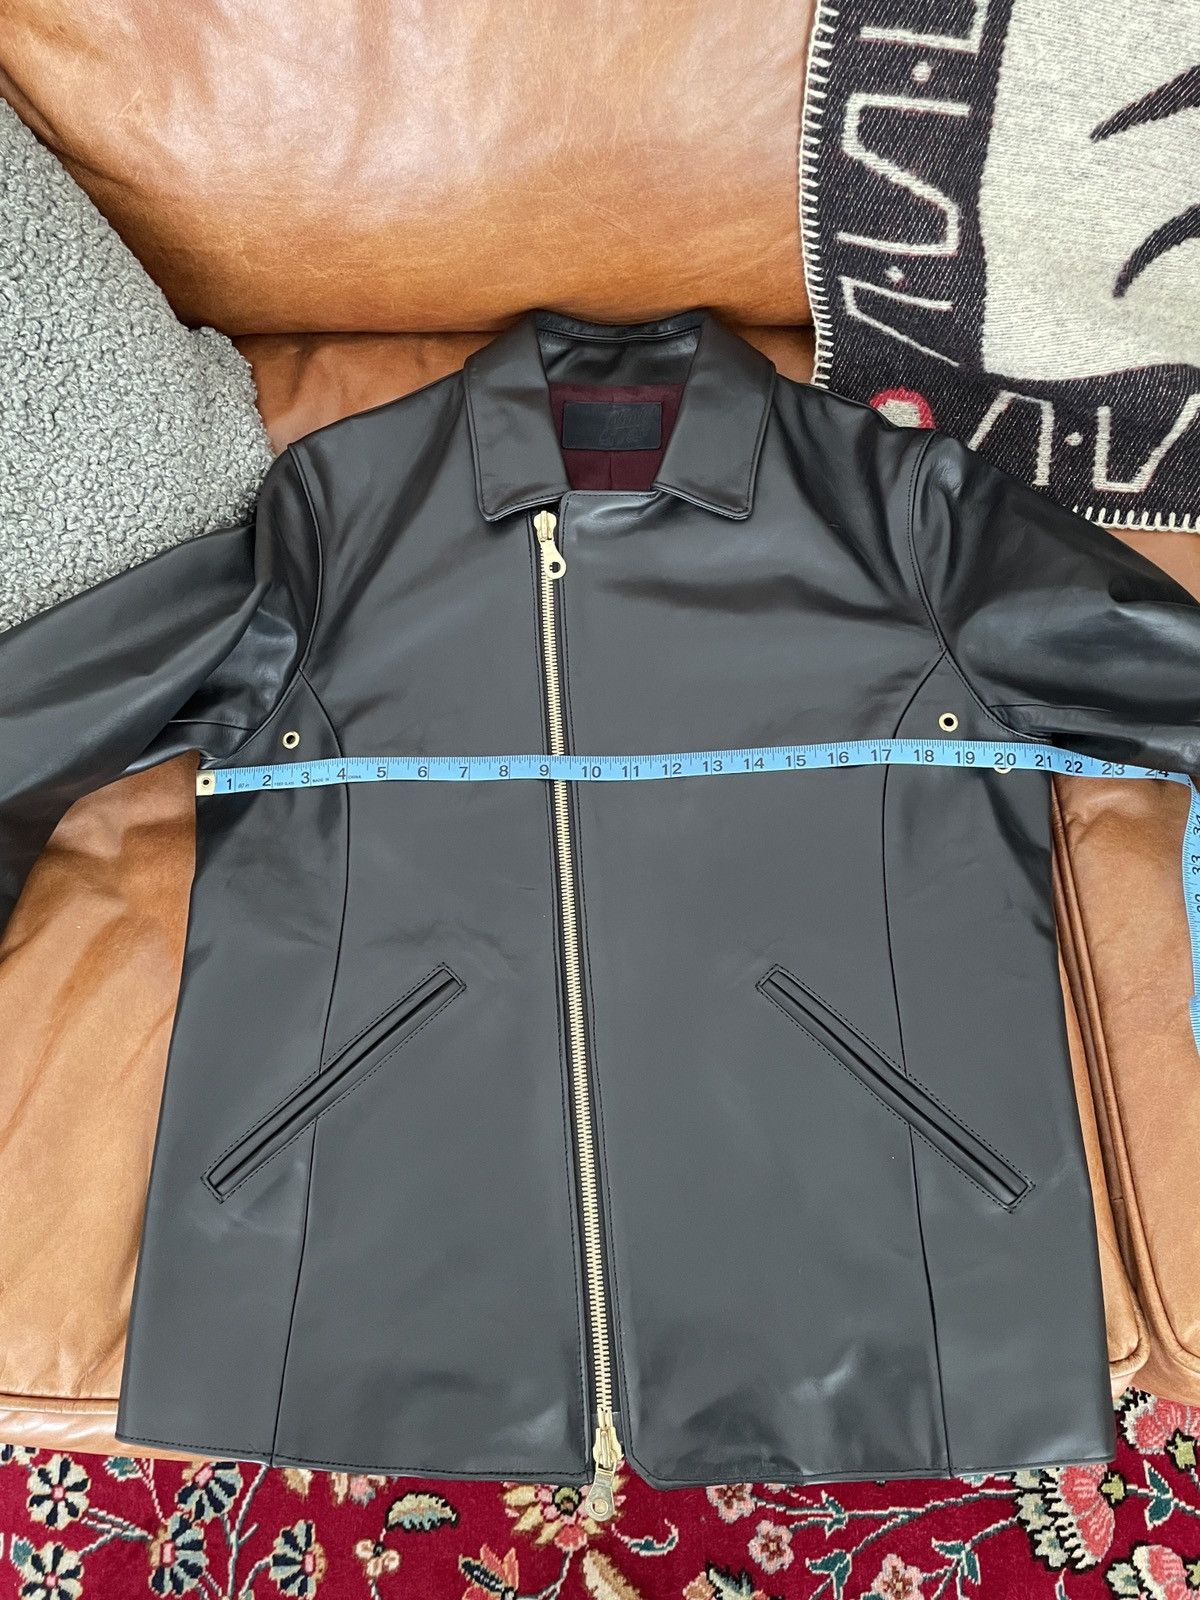 Nine Lives The 9Lives Rider's Jacket - Black Yak Leather Large Size US L / EU 52-54 / 3 - 6 Thumbnail